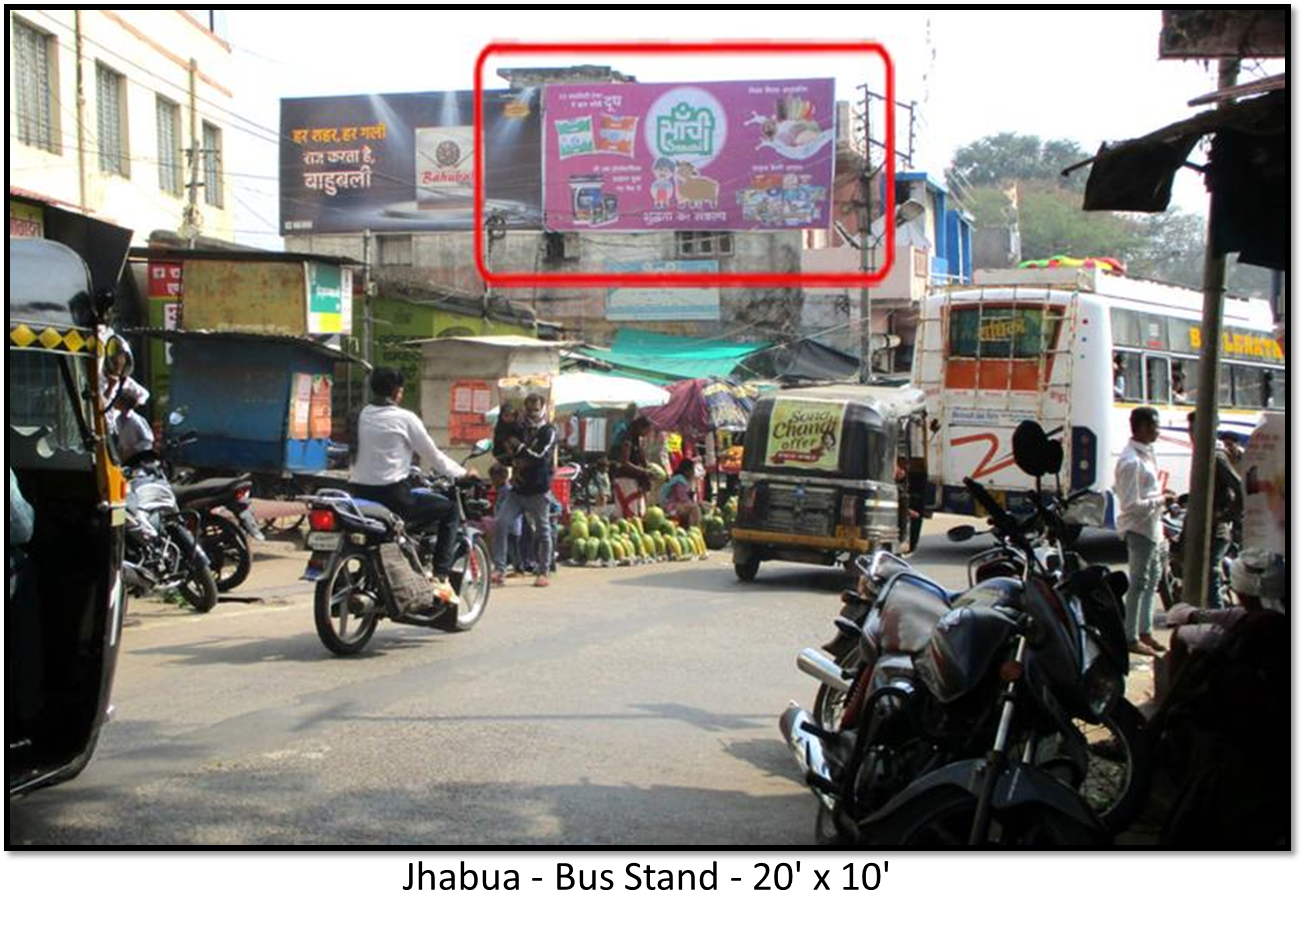 Billboard - Bus Station, Jhabua, Madhya Pradesh